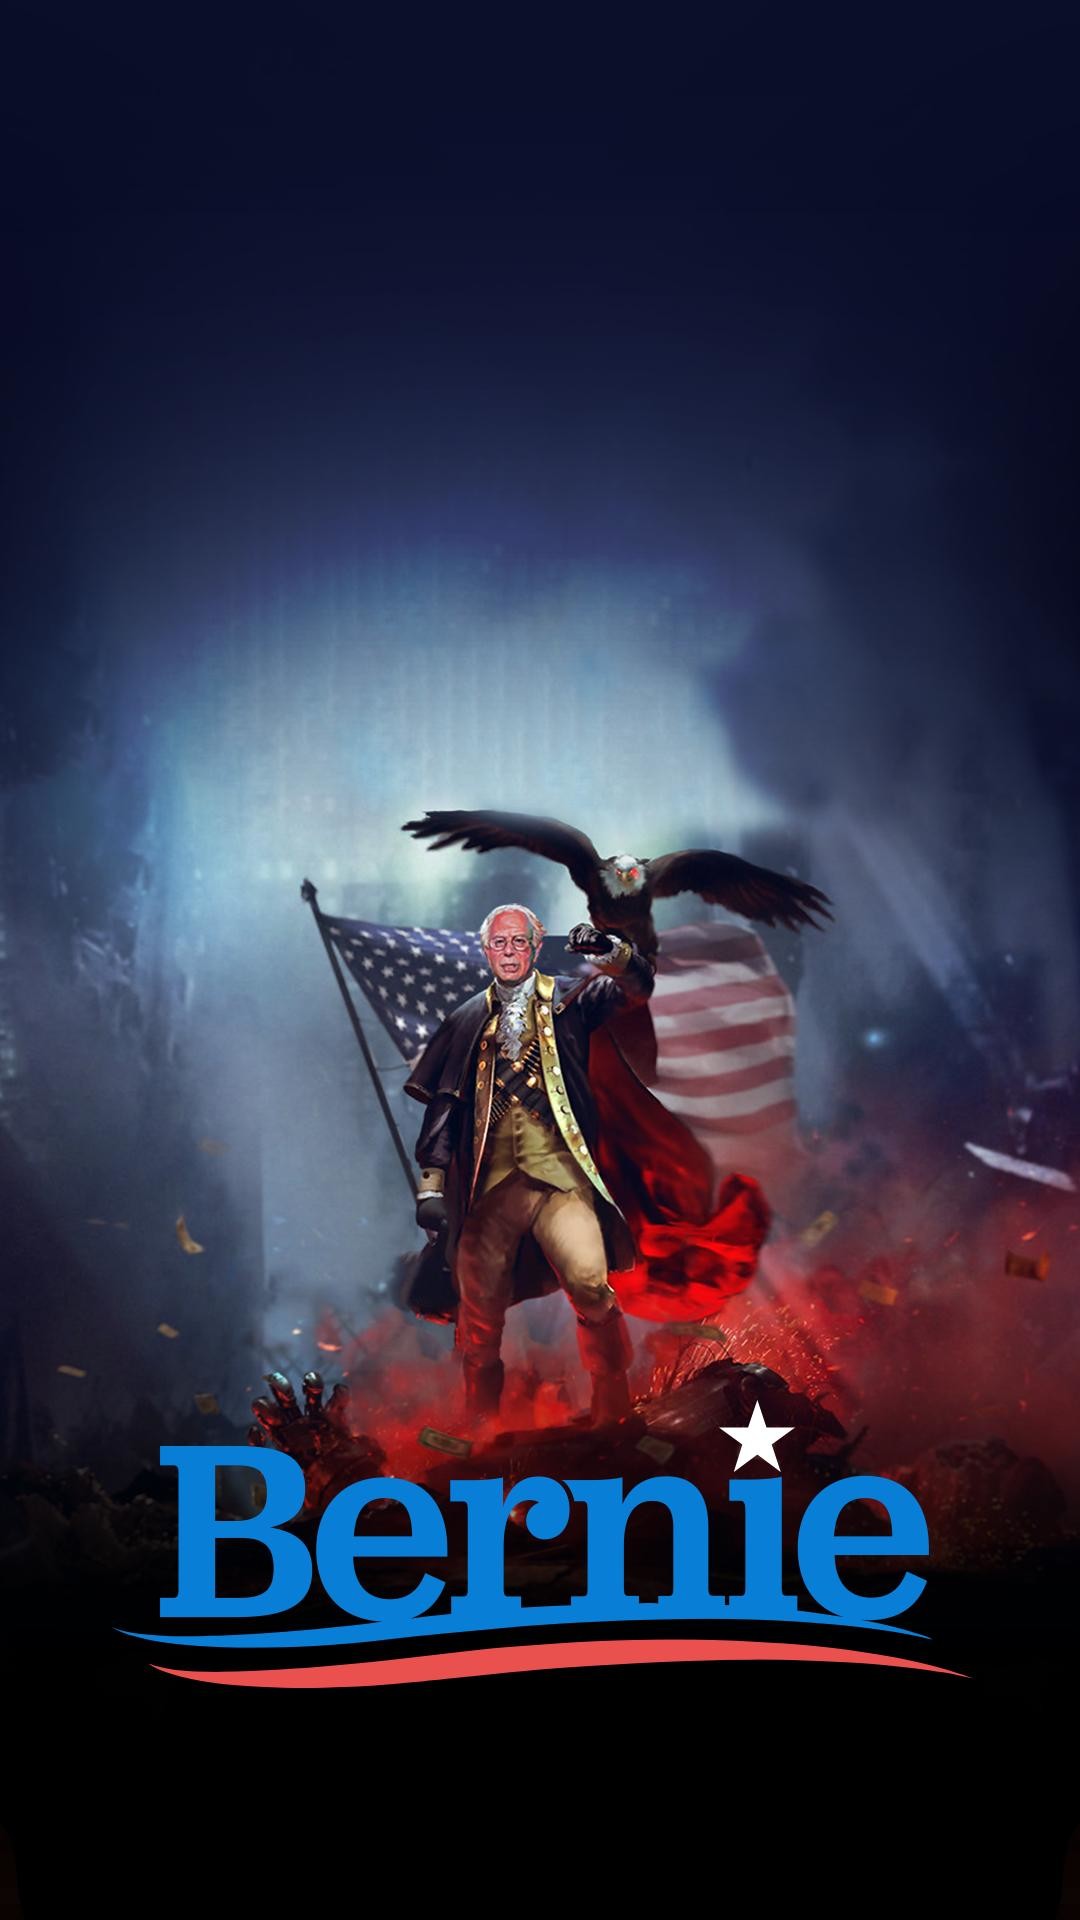 1080x1920 Bernie Sanders For President iPhone 6 Plus HD Wallpaper ...